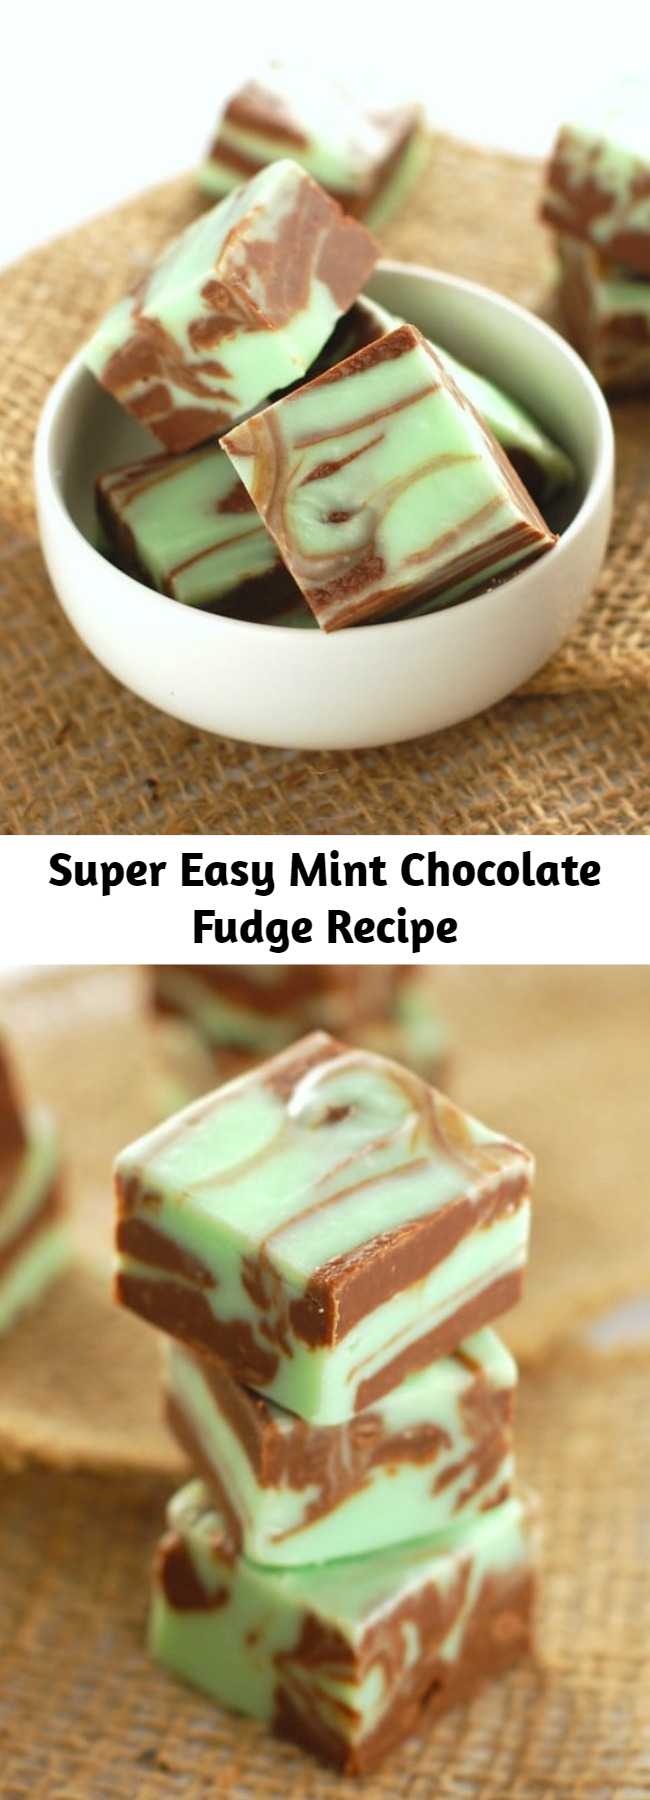 Super Easy Mint Chocolate Fudge Recipe - A simple fudge recipe that looks fancy and tastes amazing!